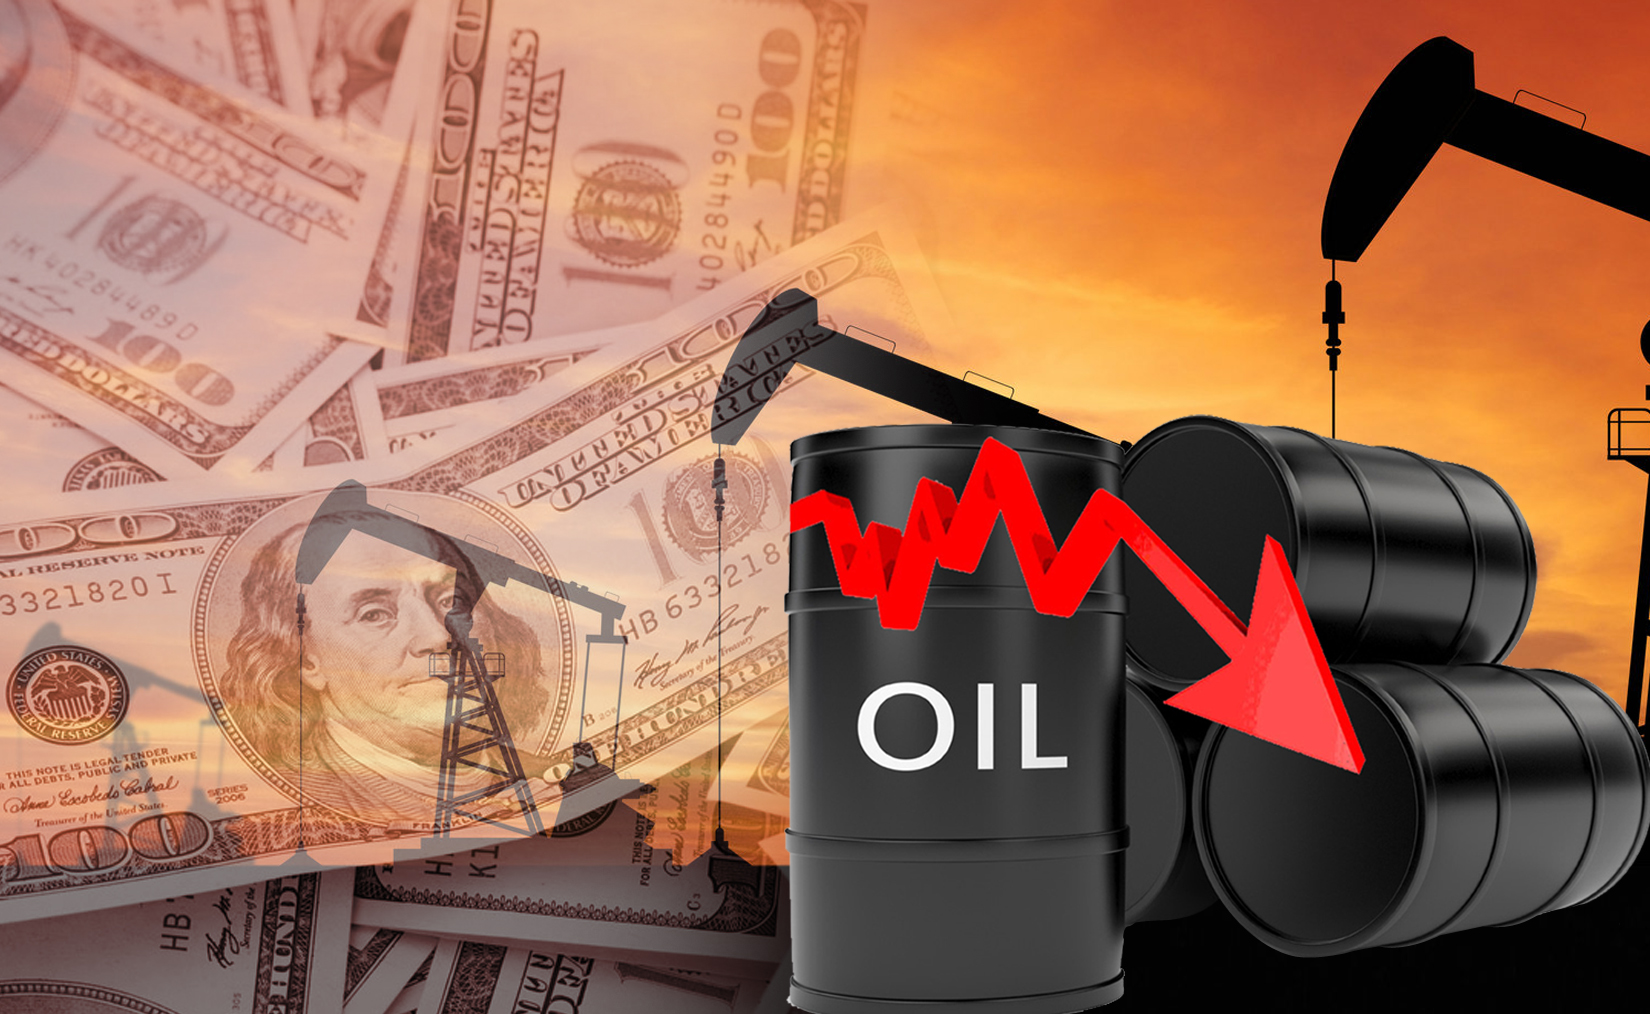 Kuwait oil price down 98 cents to USD 119.24 pb - KPC                                                                                                                                                                                                     